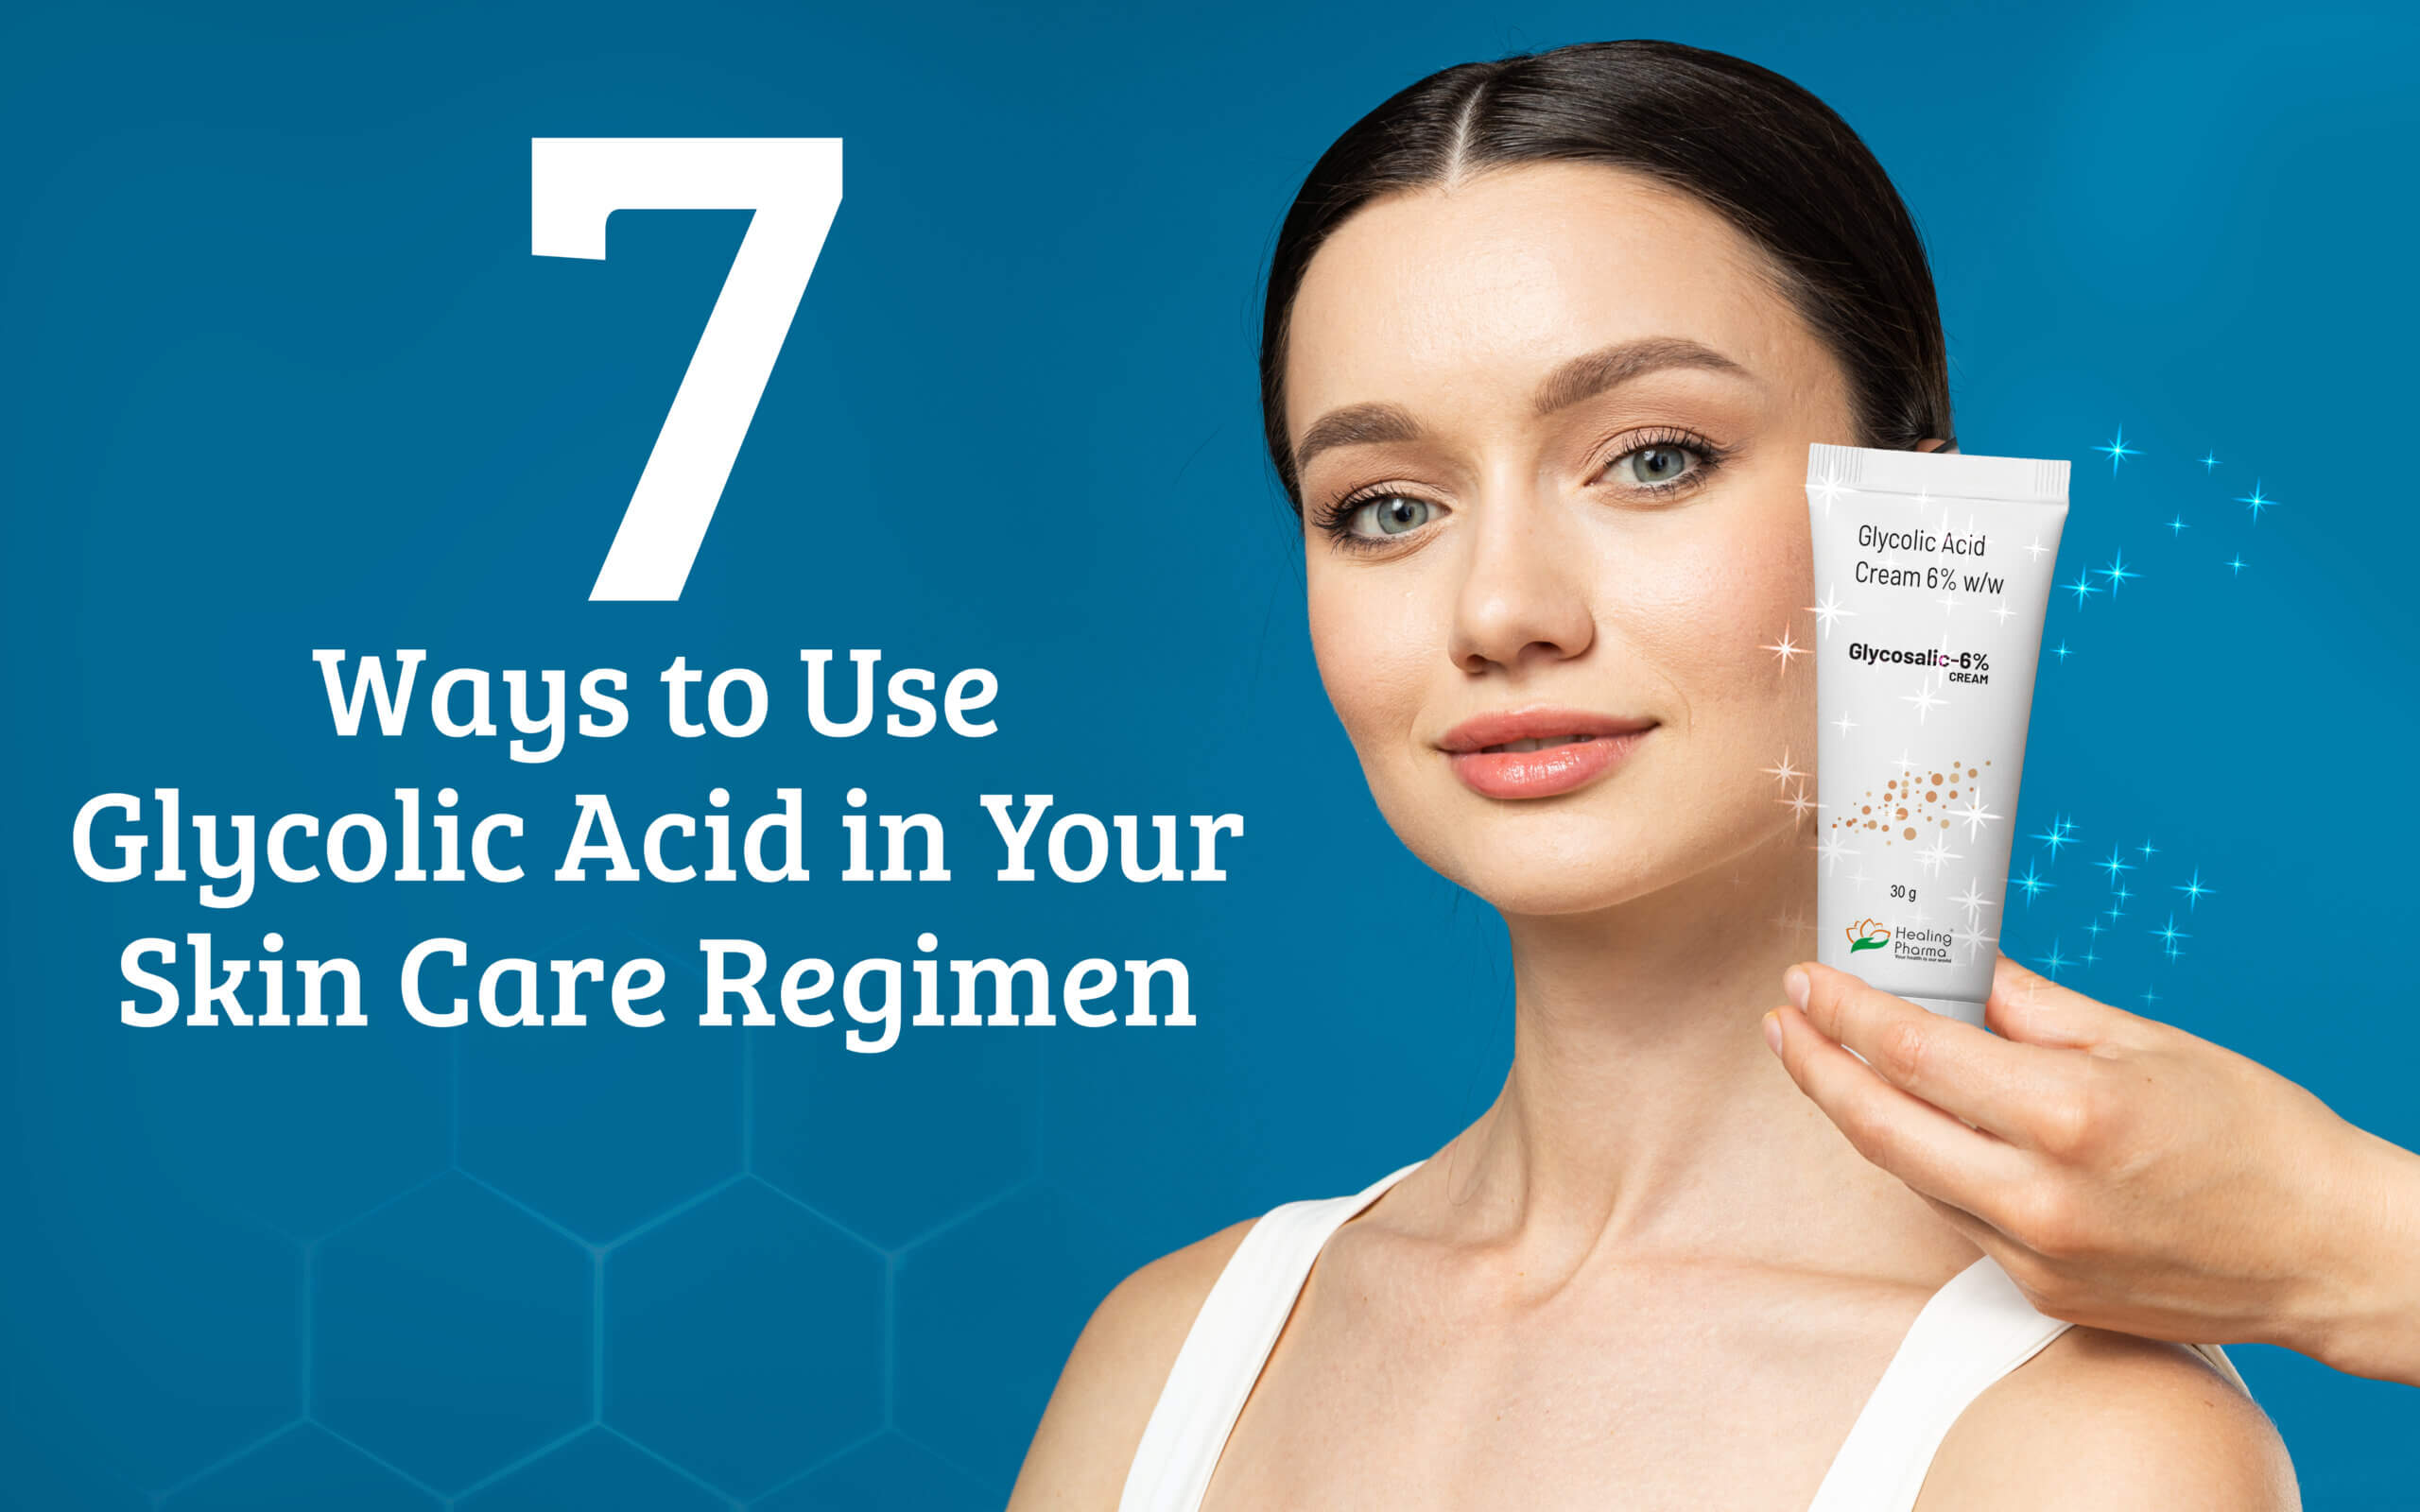 Use Glycolic Acid in Your Skin Care Regimen